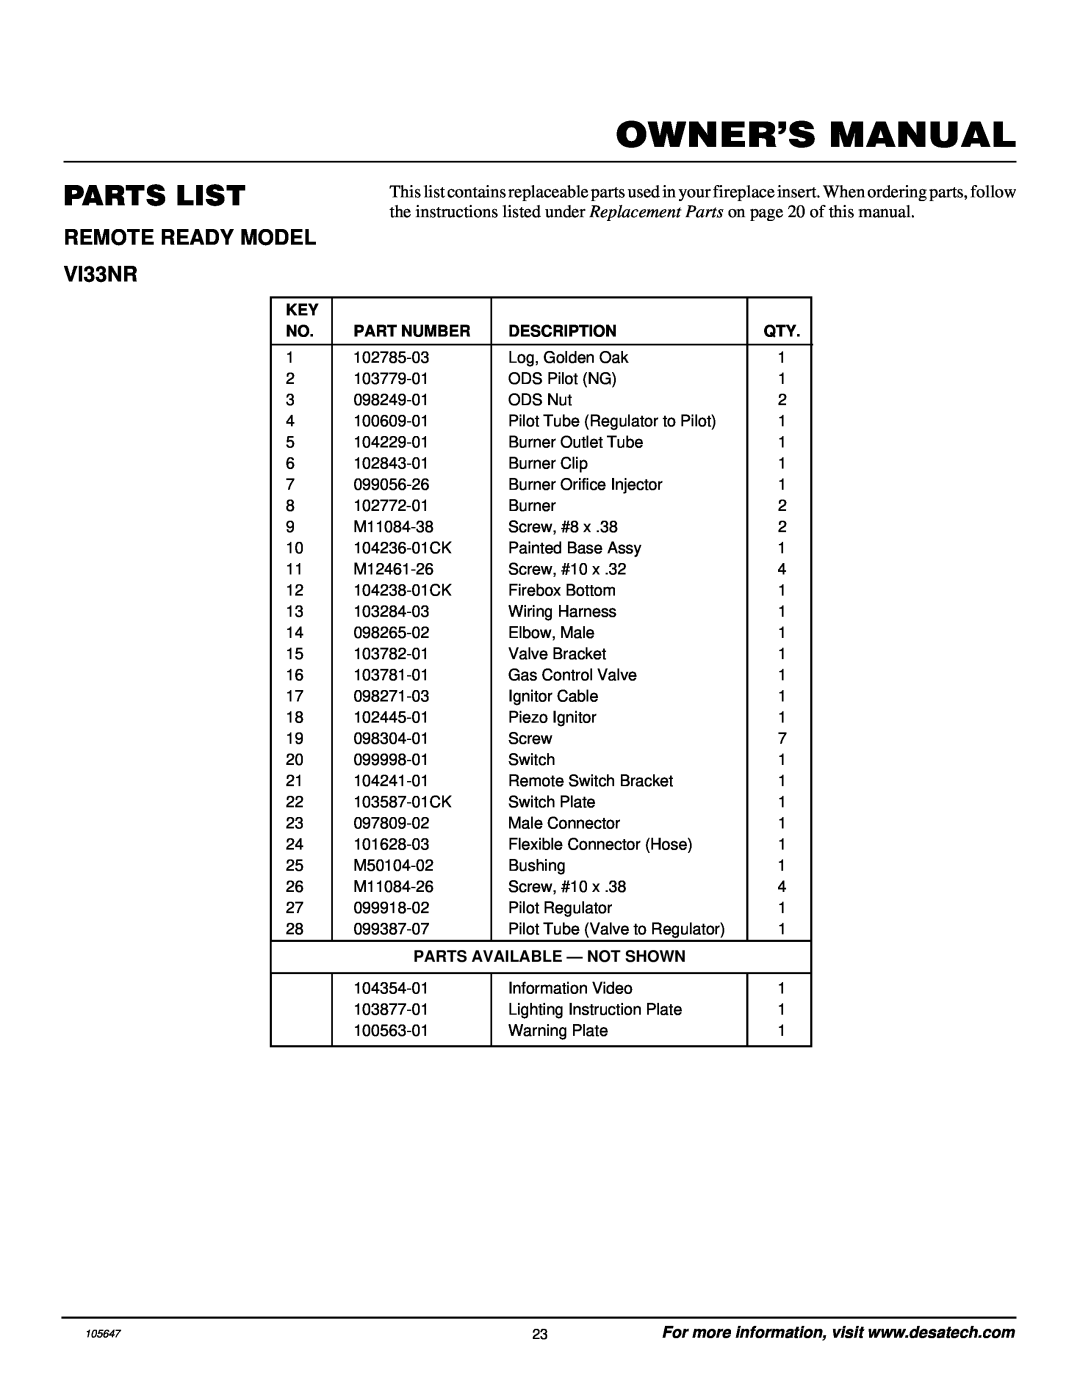 Desa installation manual Parts List, Owner’S Manual, REMOTE READY MODEL VI33NR 